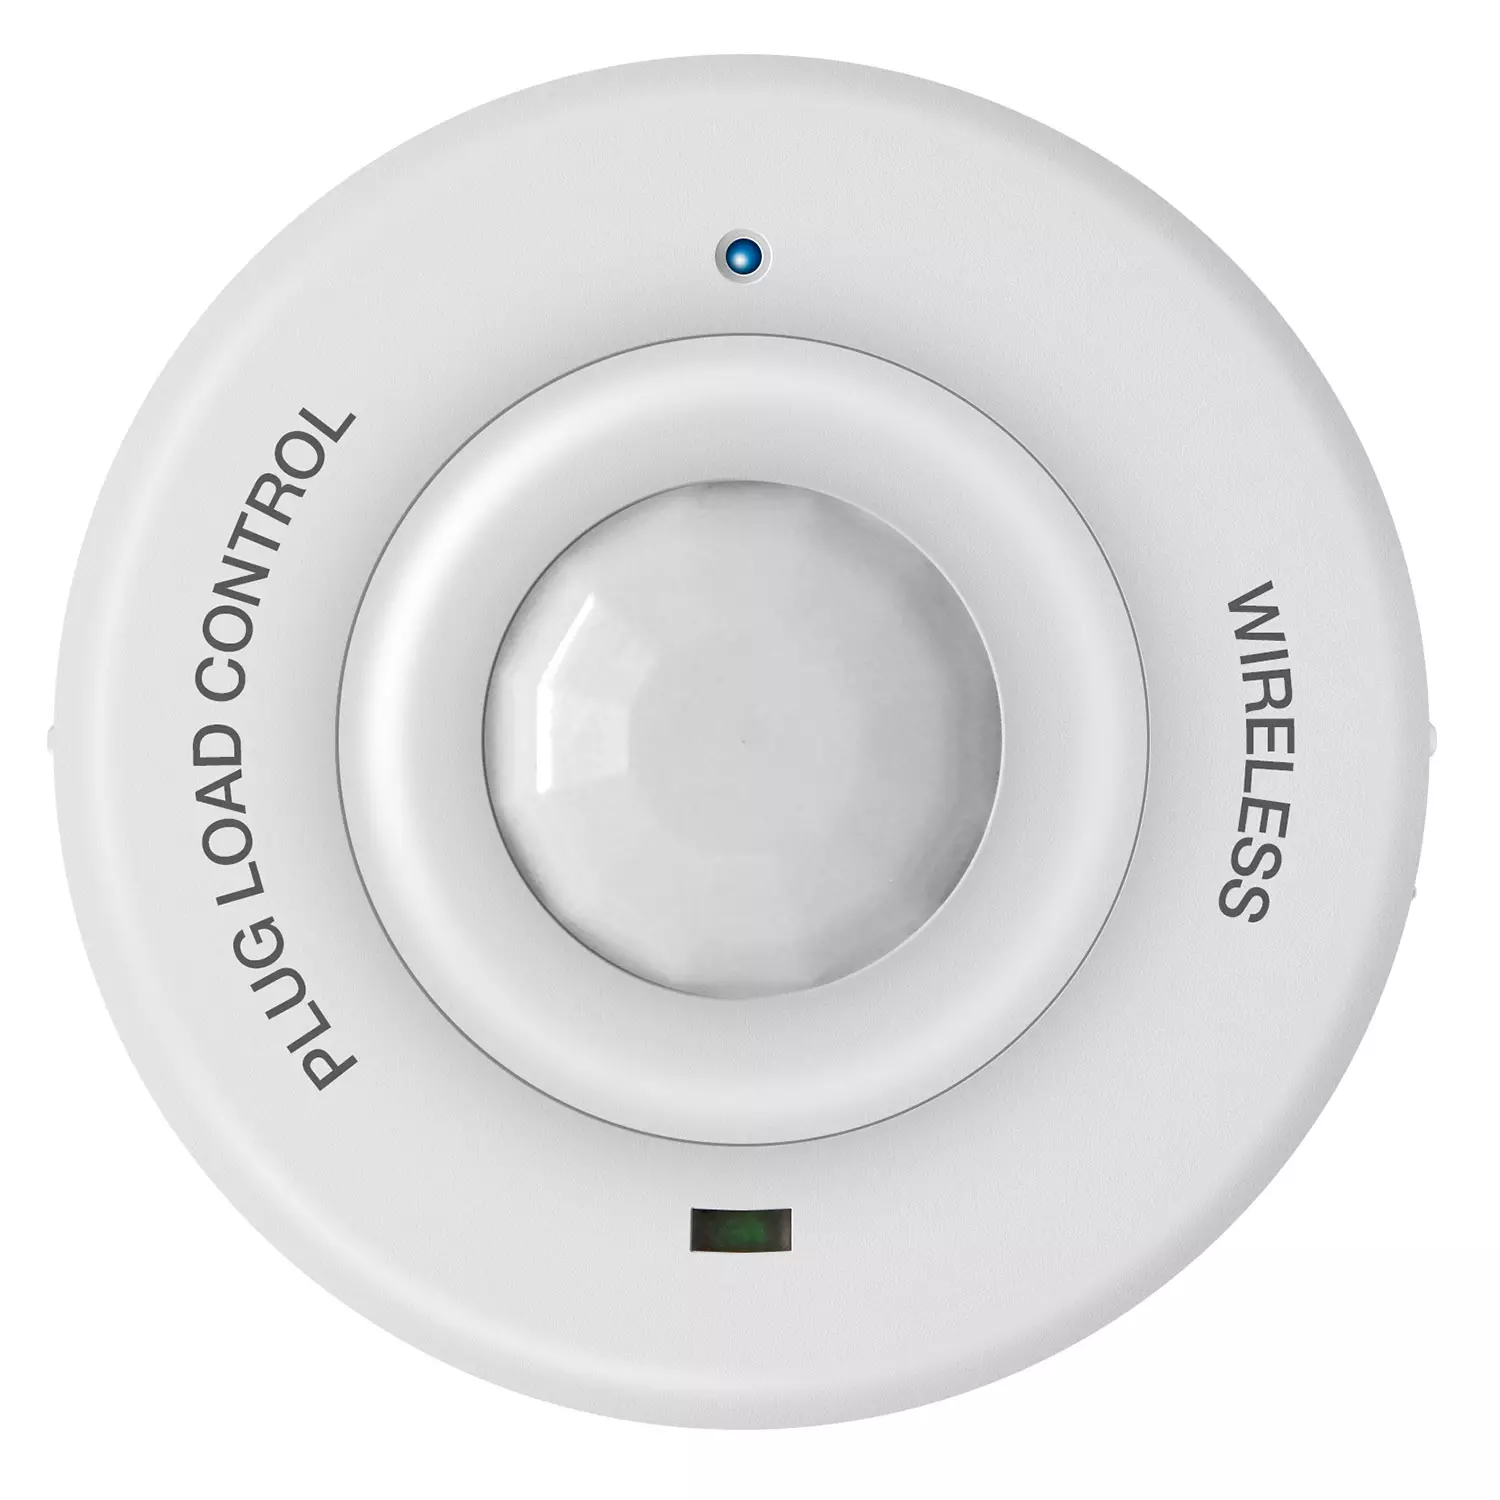 Wireless PIR Ceiling Sensor with Three 15A/125V Plug Load Control Receptacles